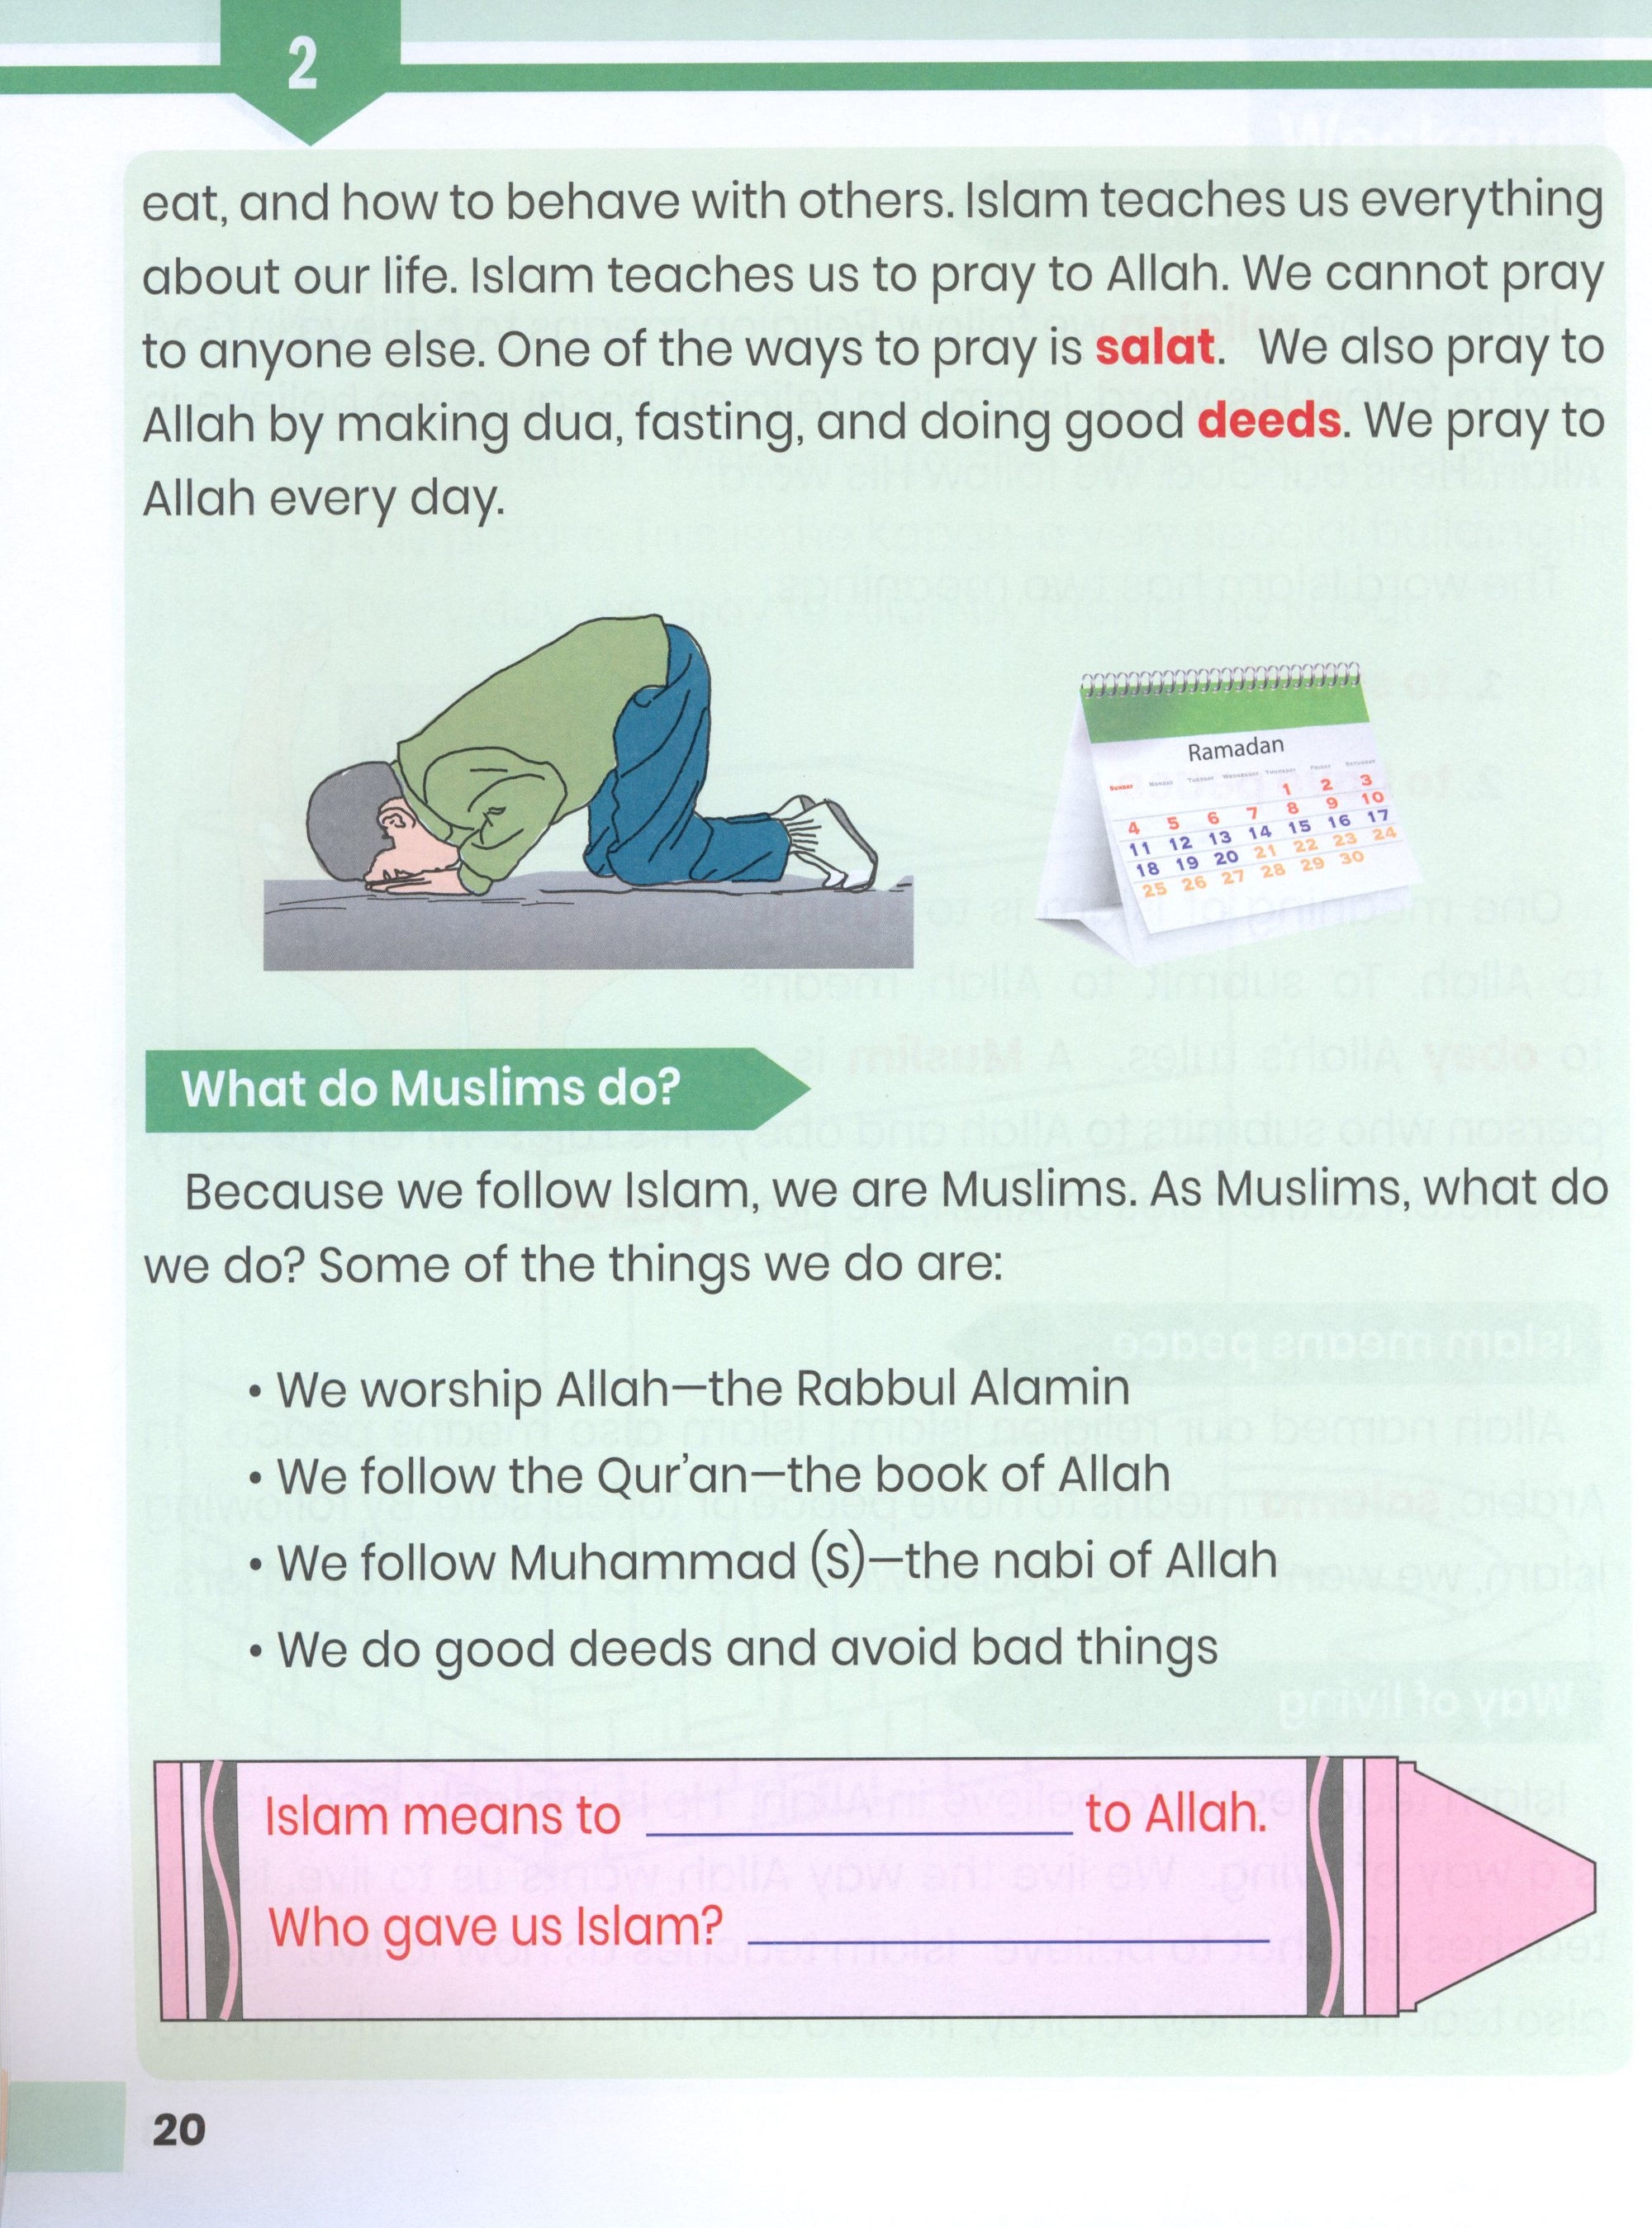 Weekend Learning Islamic Studies Level 1